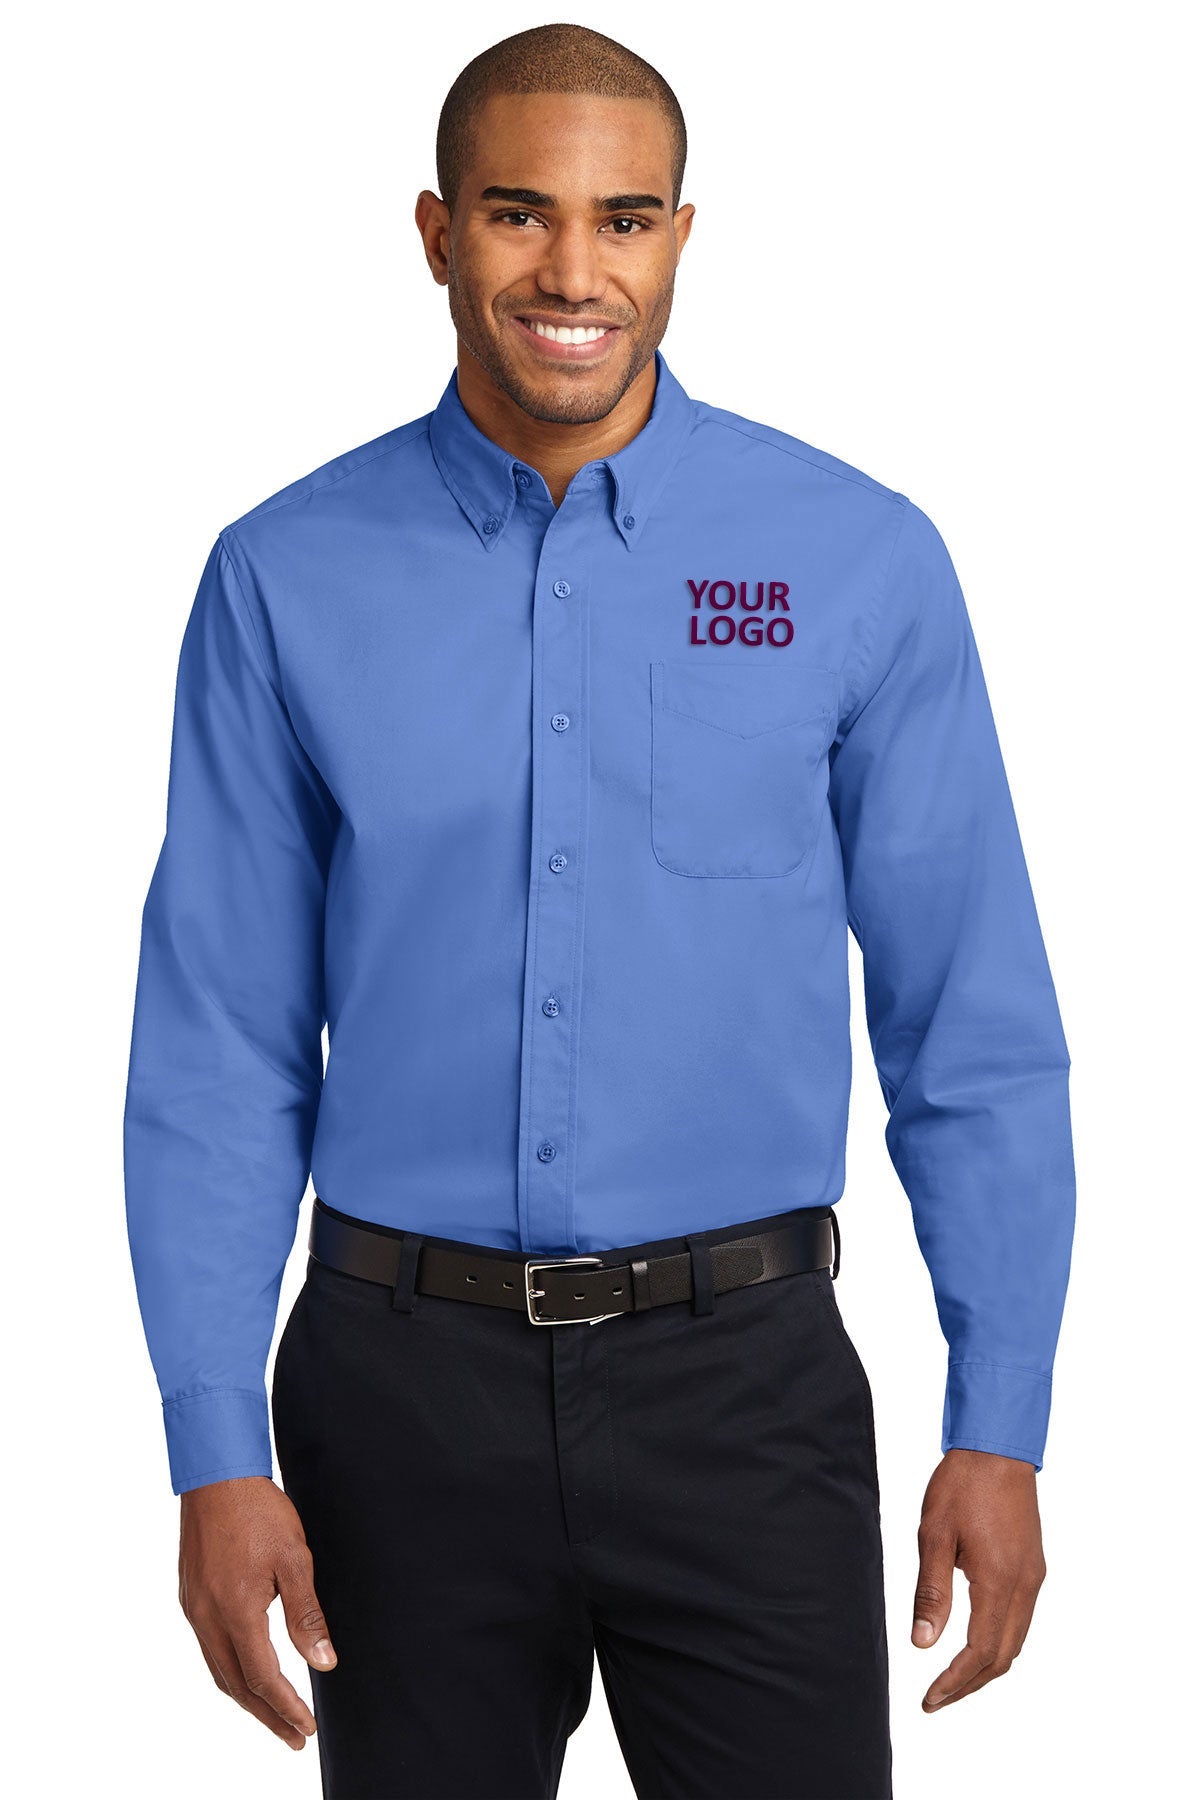 Port Authority Ultramarine Blue TLS608 work shirts with logo